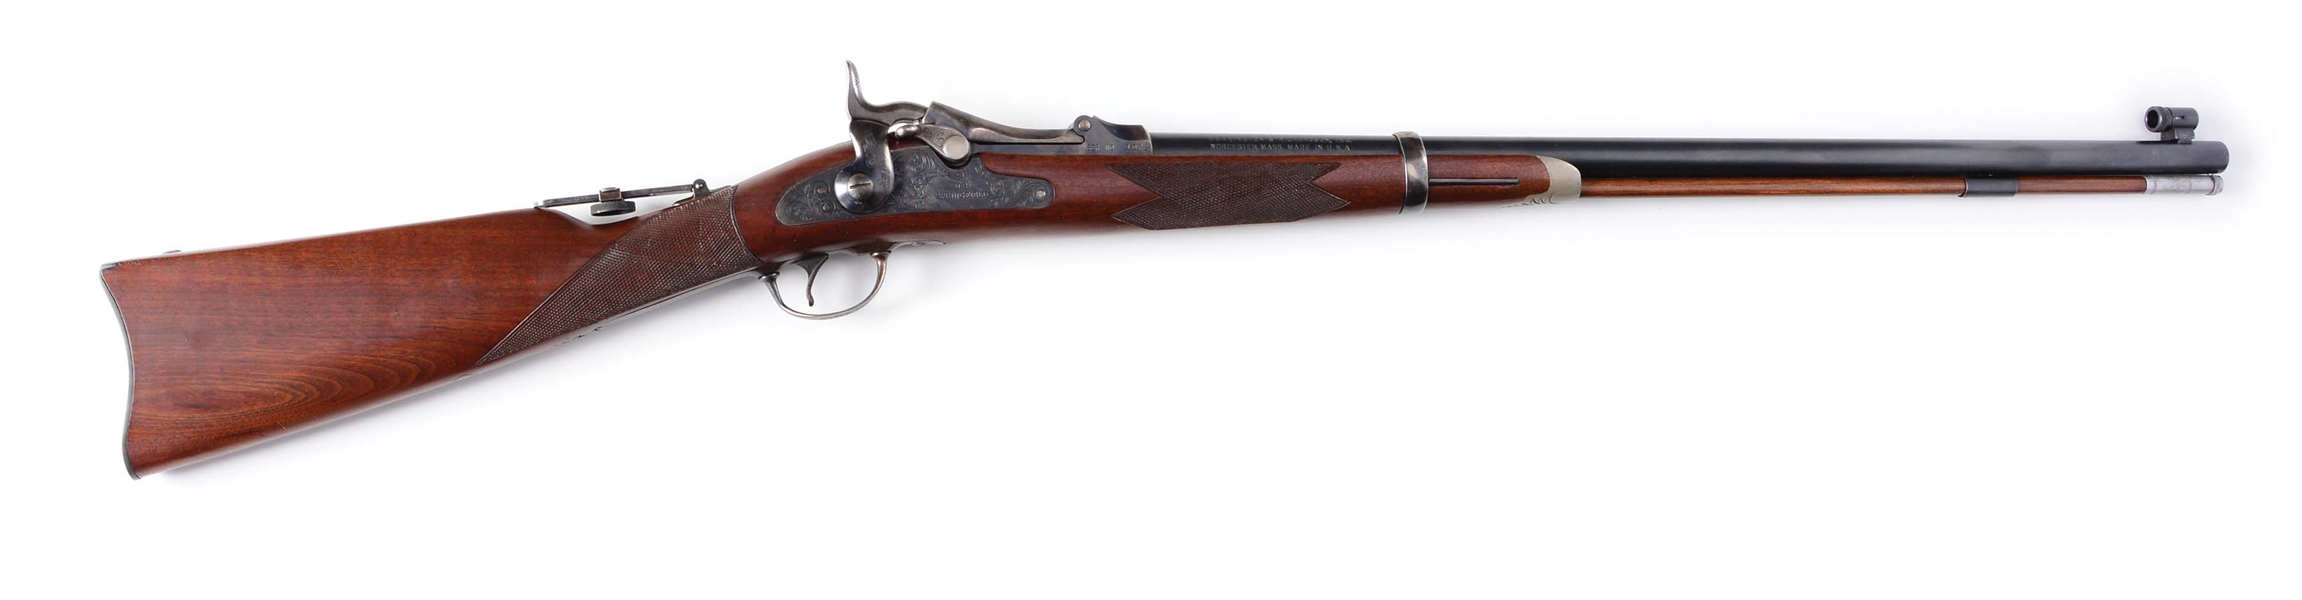 (M) H&R MODEL 1873 OFFICERS MODEL TRAPDOOR SINGLE SHOT RIFLE.